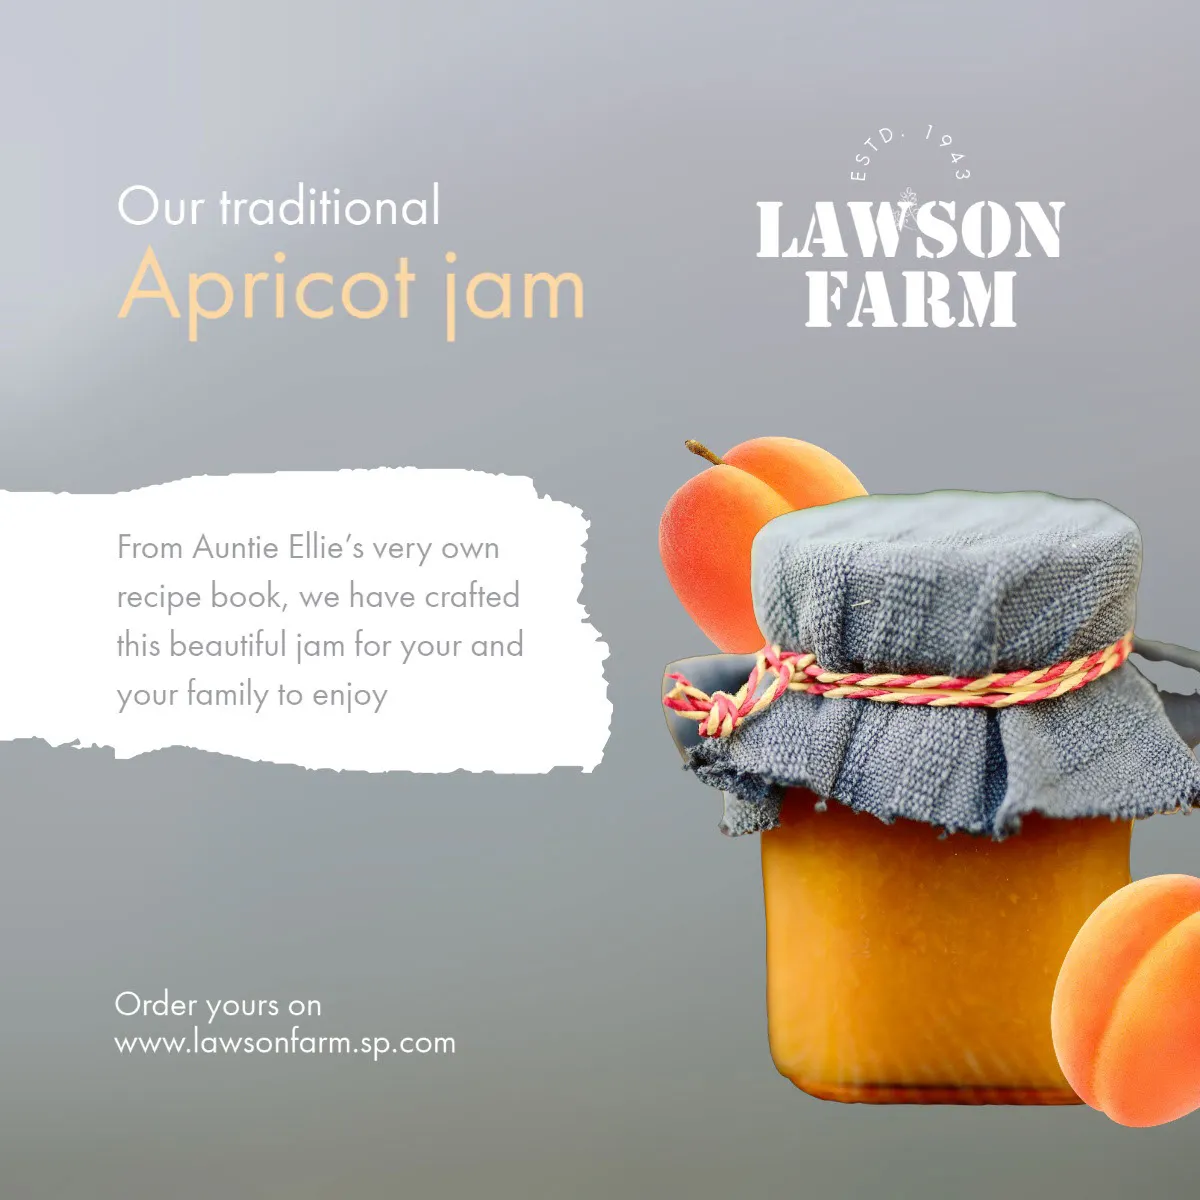 Grey And Orange Farm Apricot Jam Instagram Square